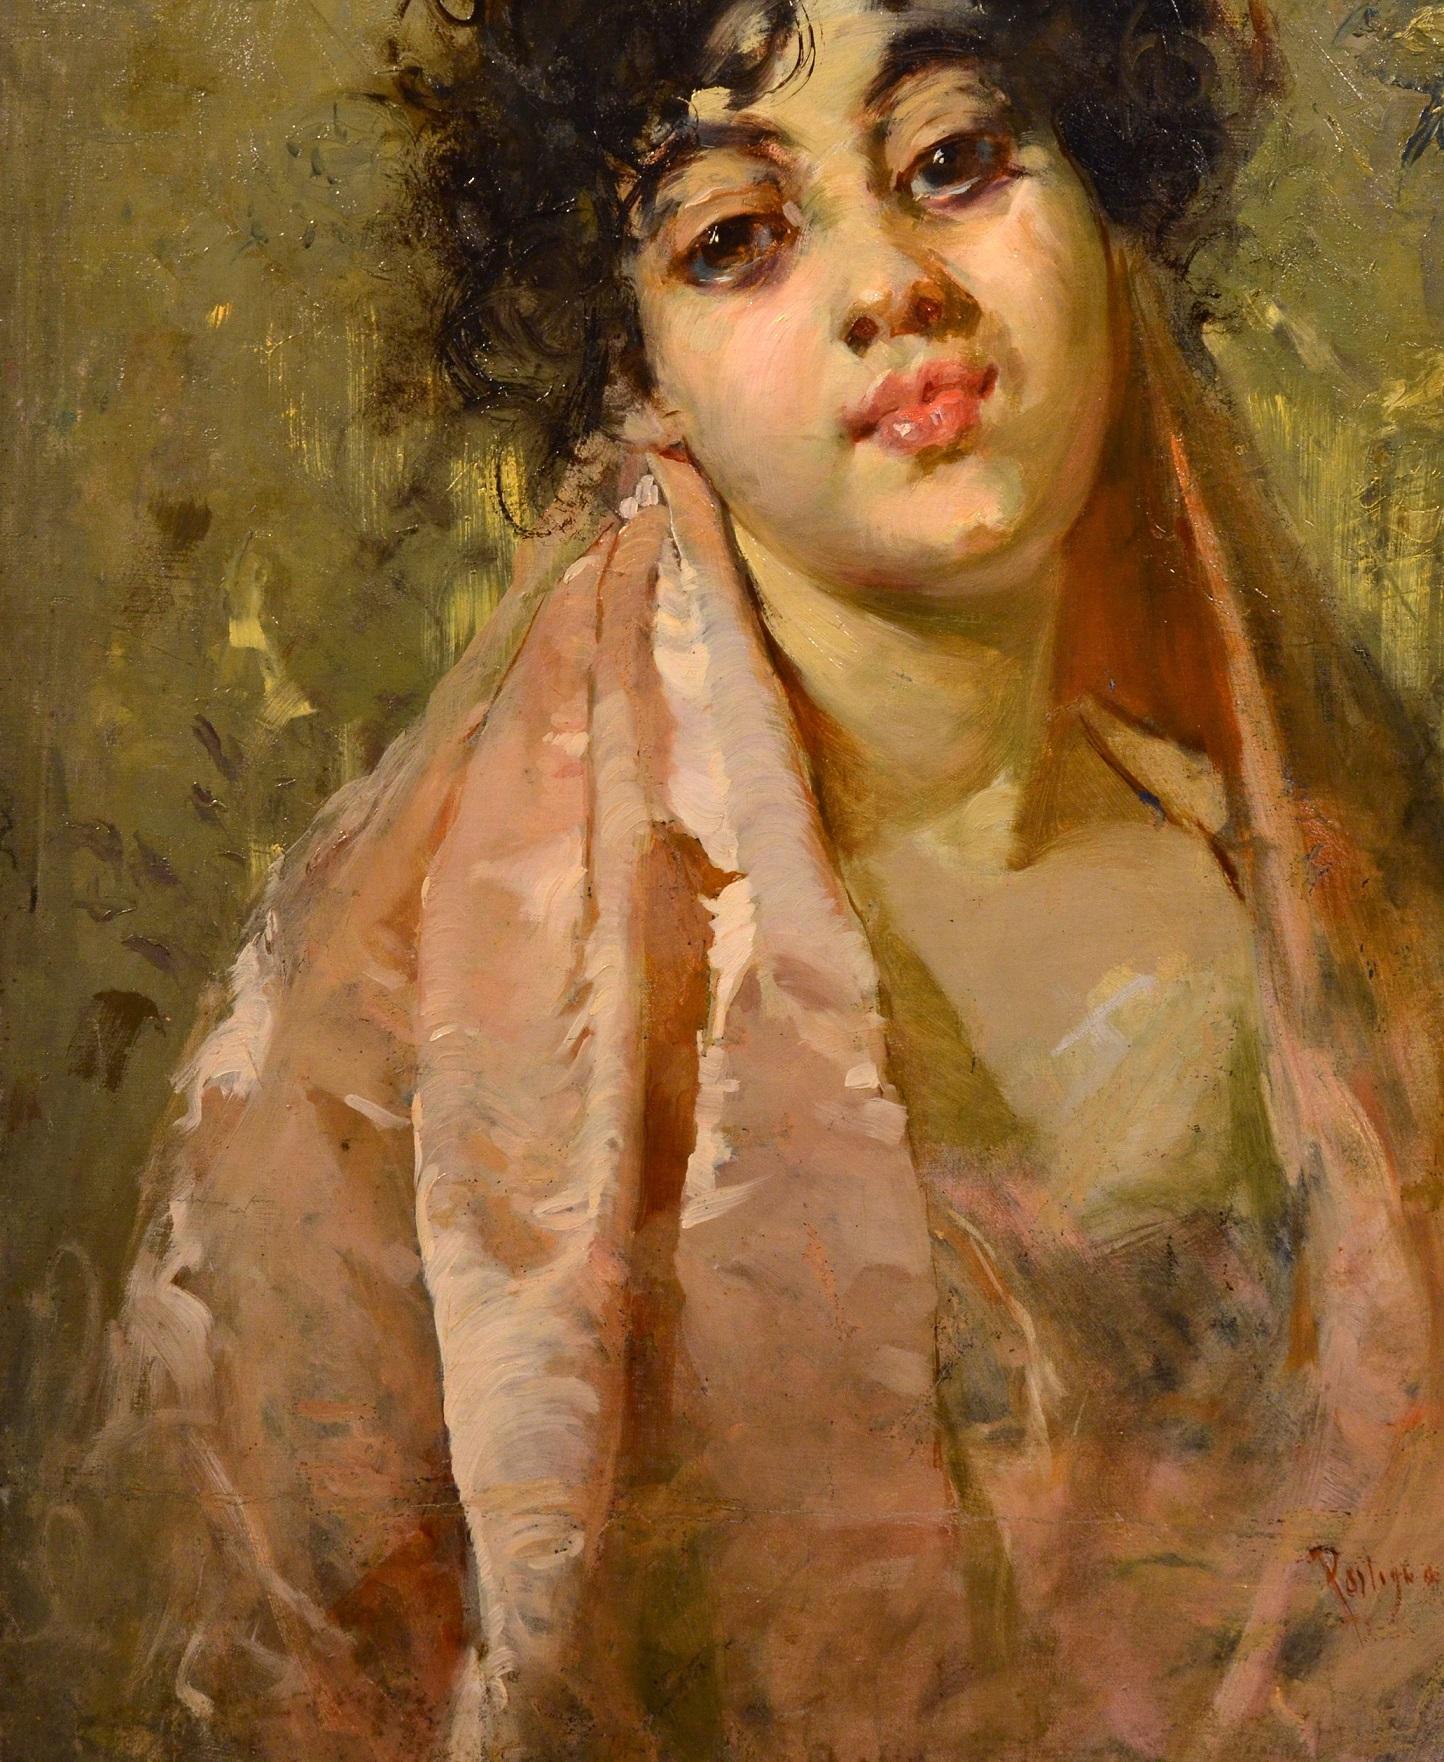 Salvatore Postiglione) Paint Oil on canvas Signed Portrait Woman Impressionism 3